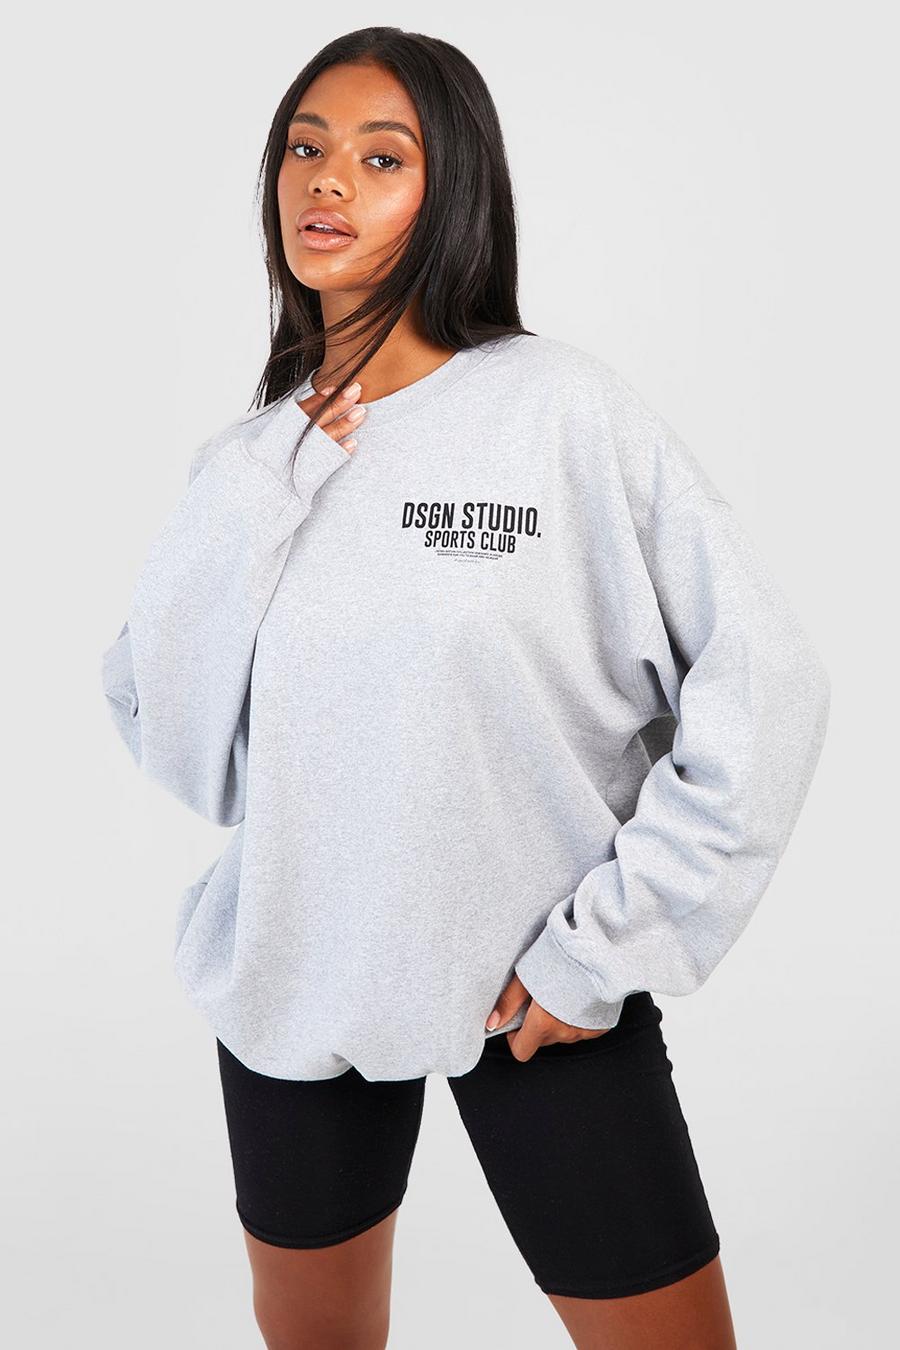 Oversize Sweatshirt mit Dsgn Studio Sports Club Slogan, Grey marl image number 1